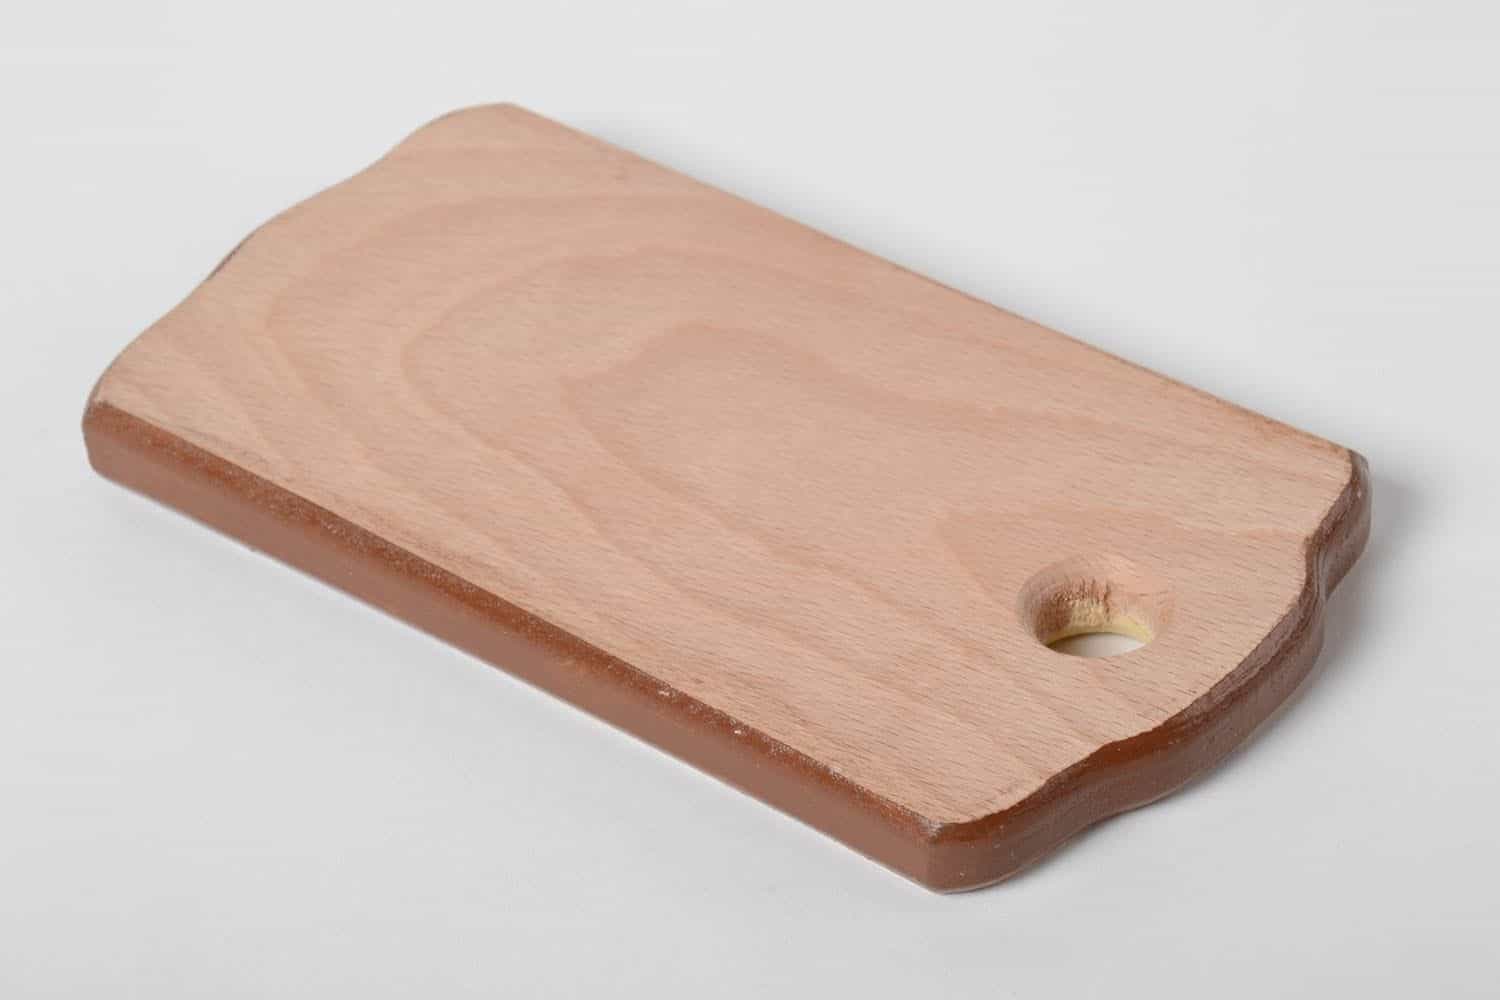 Wooden Cutting Board Idea